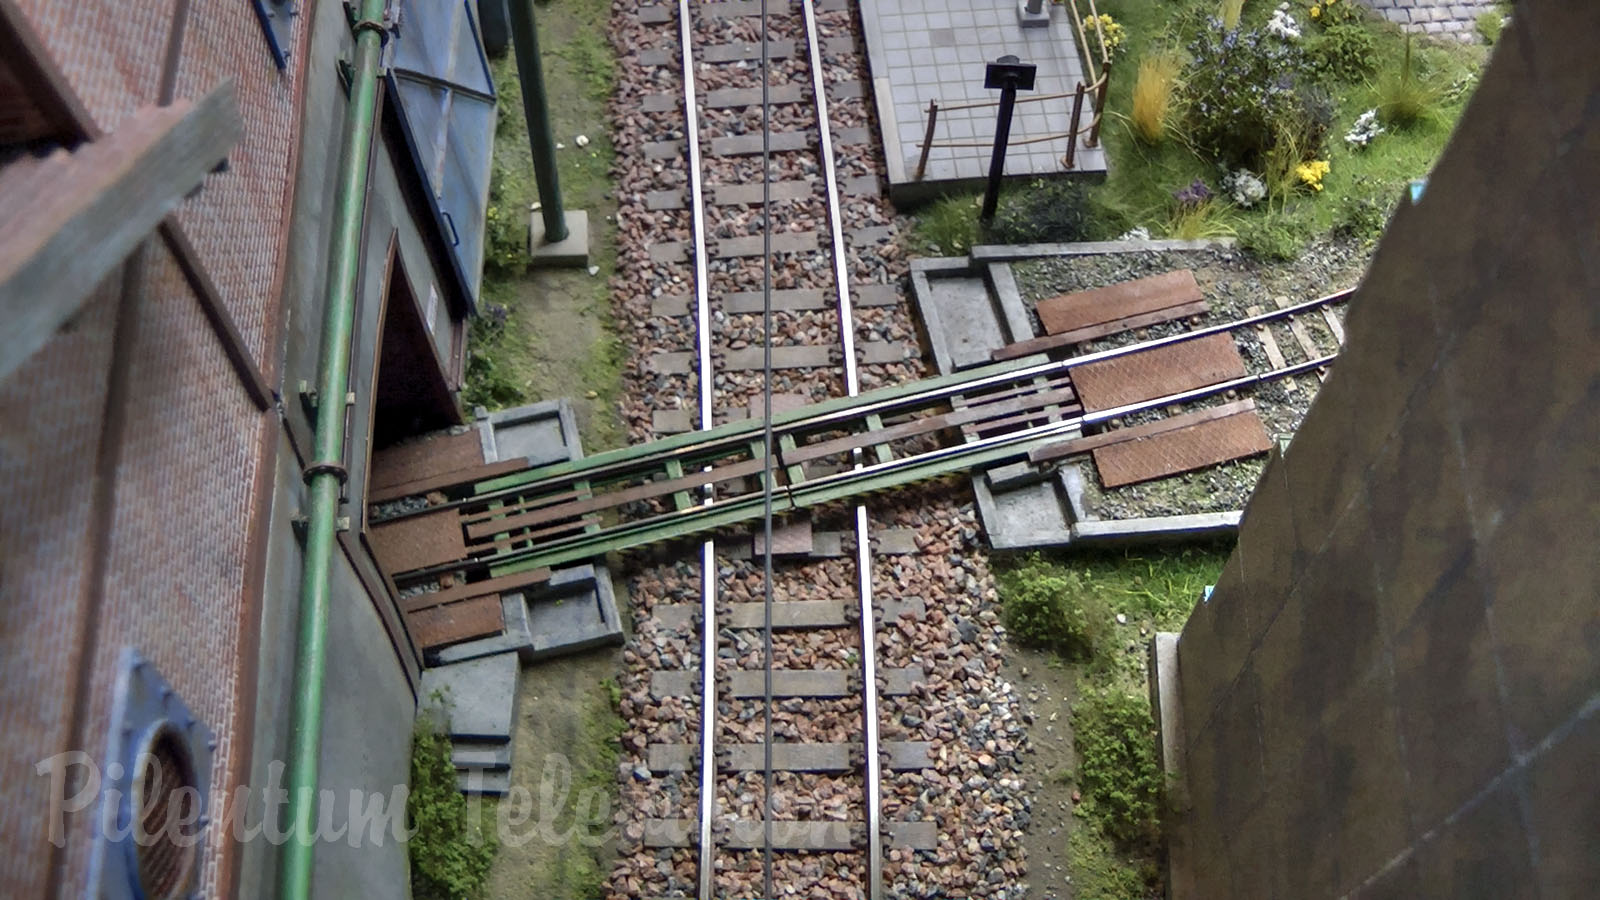 Model Train Diorama of a Narrow Gauge Field Railway – On30 Model Railroad Layout